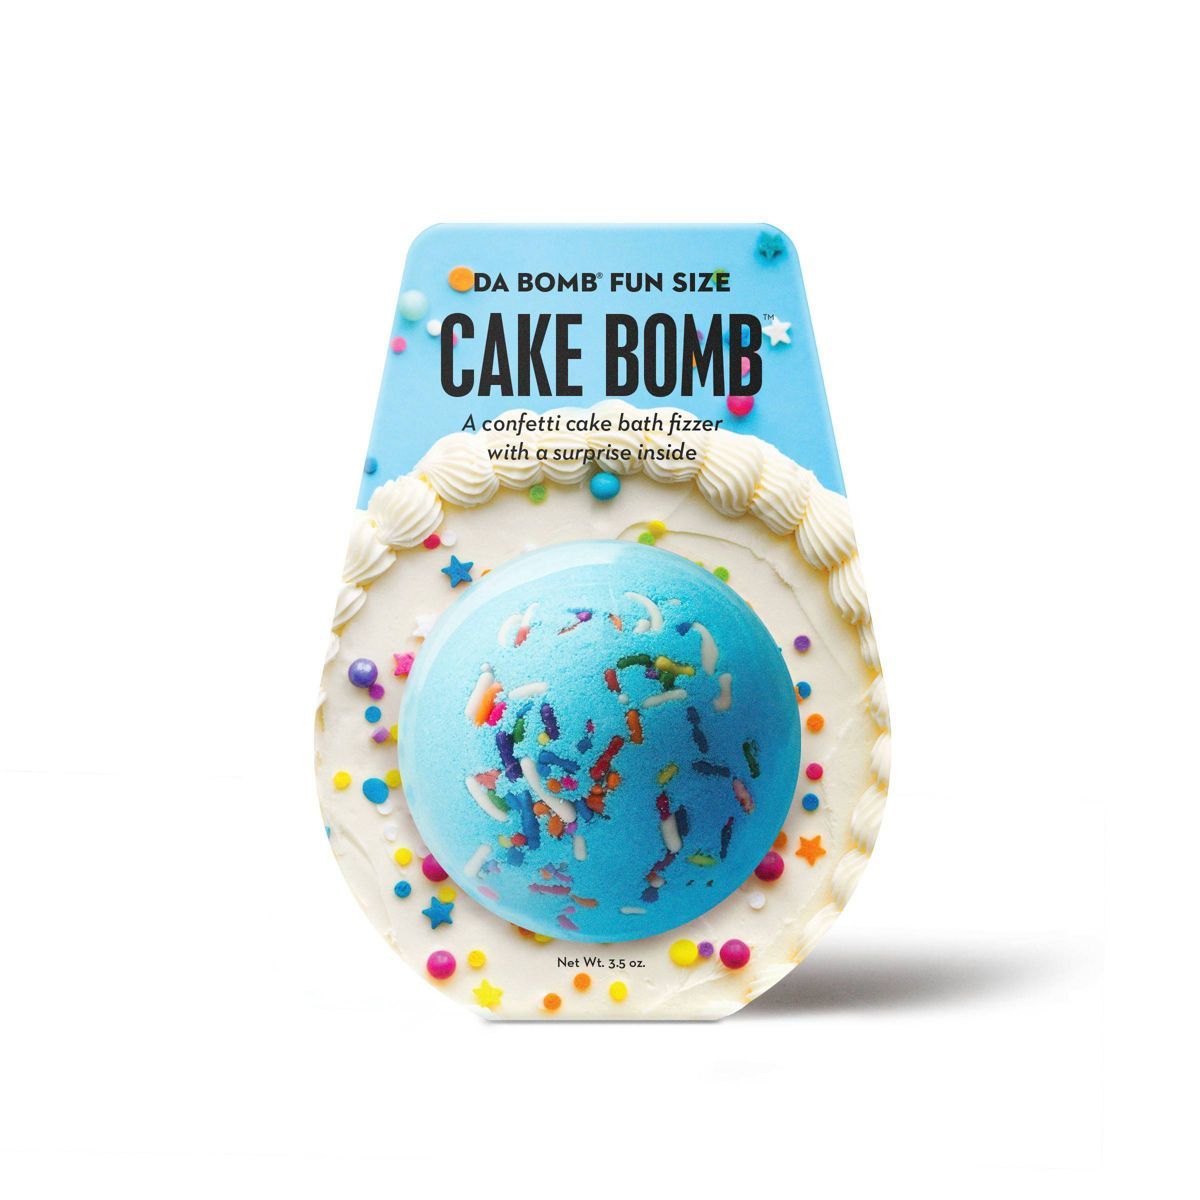 Da Bomb Bath Fizzers Cake Blue Confetti Bath Bomb - 3.5oz | Target